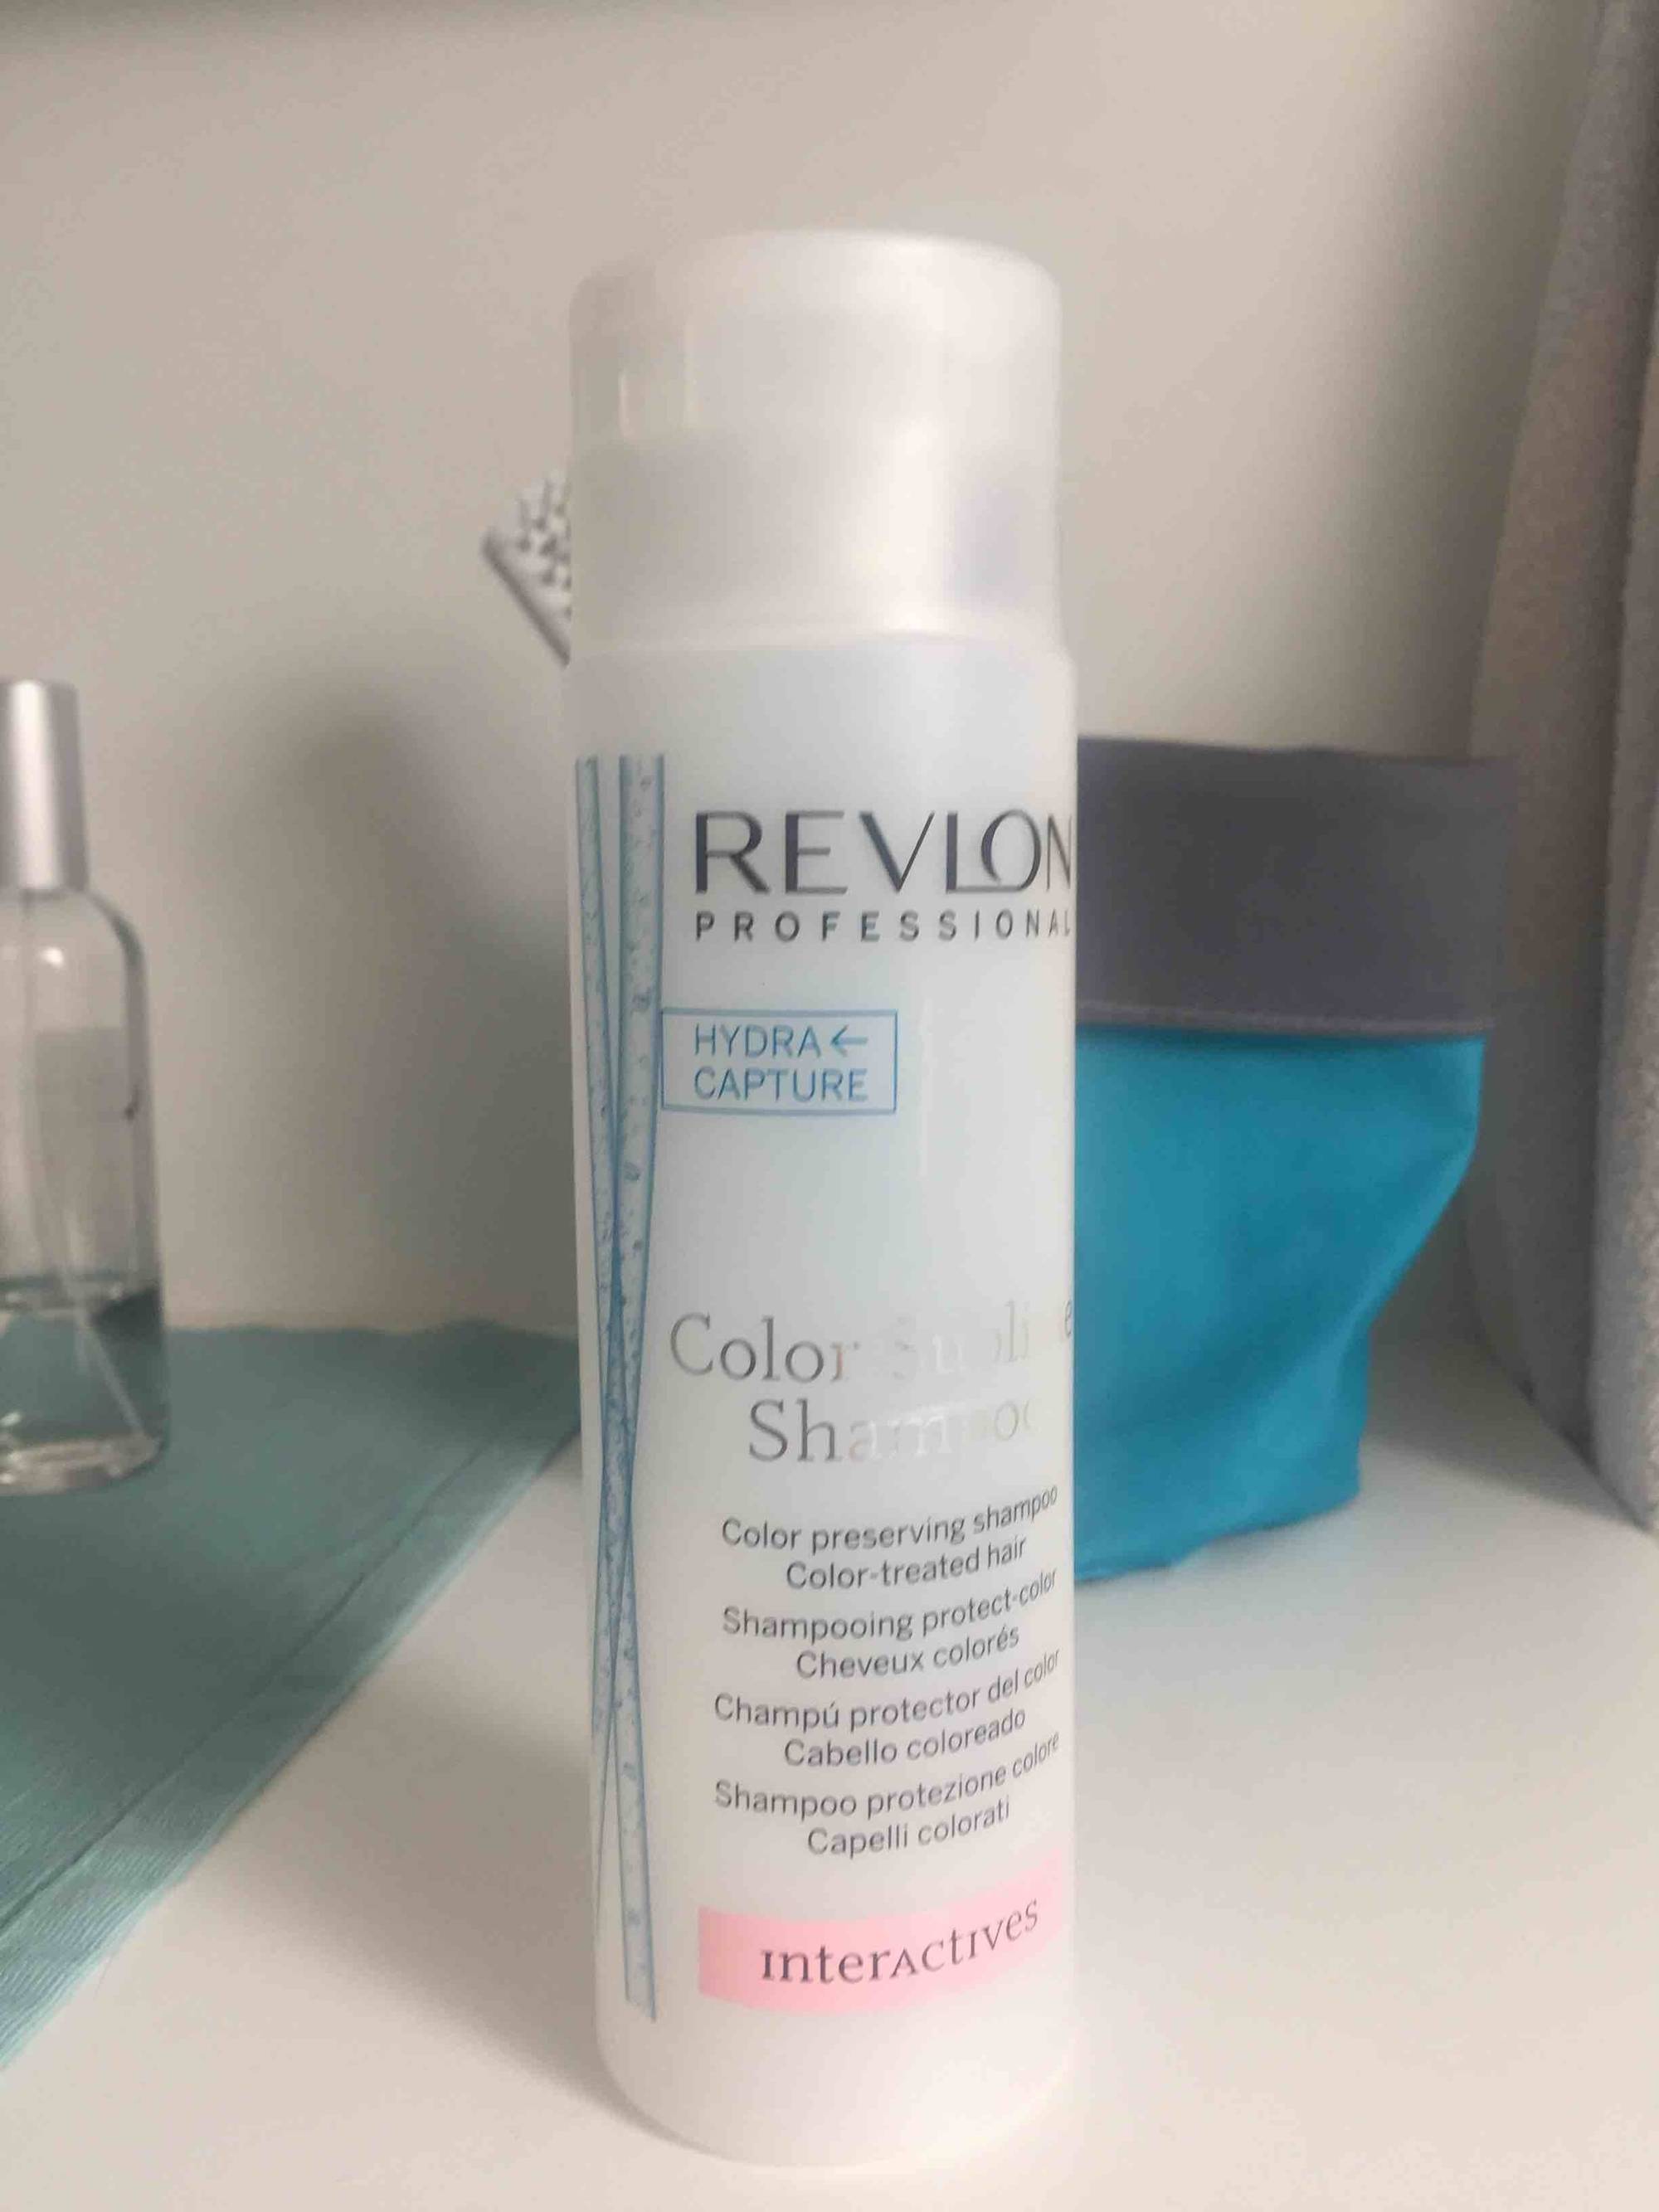 REVLON - Color sublime shampoo - Shampooing protect-color